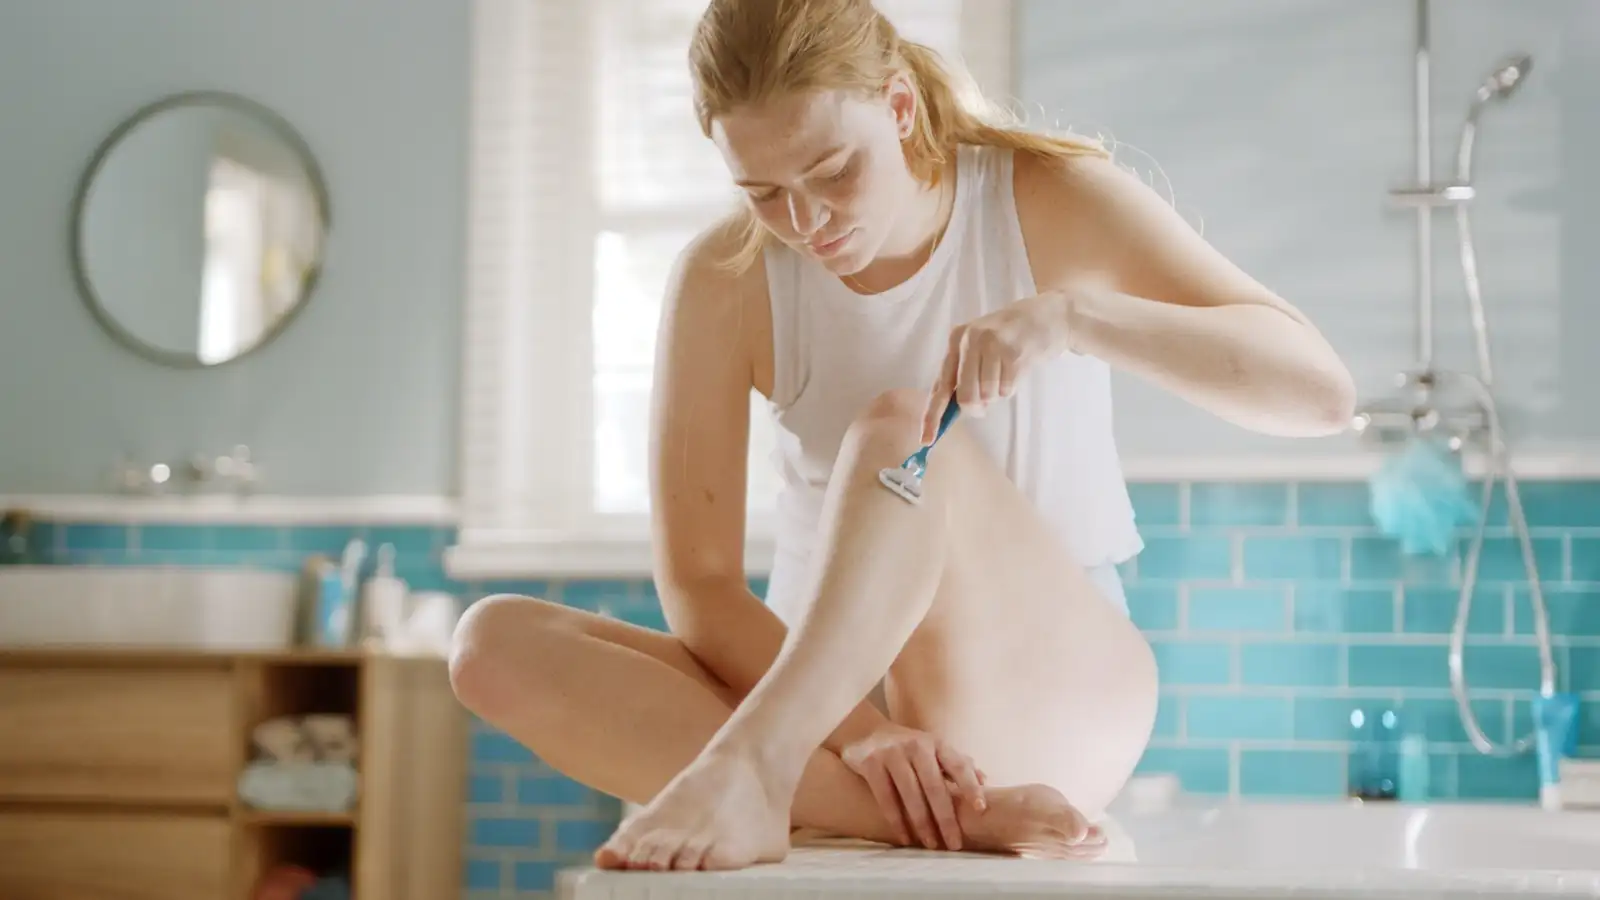 Woman Sitting on Bathroom Floor and Shaving Her Legs with Gillette Venus Razor